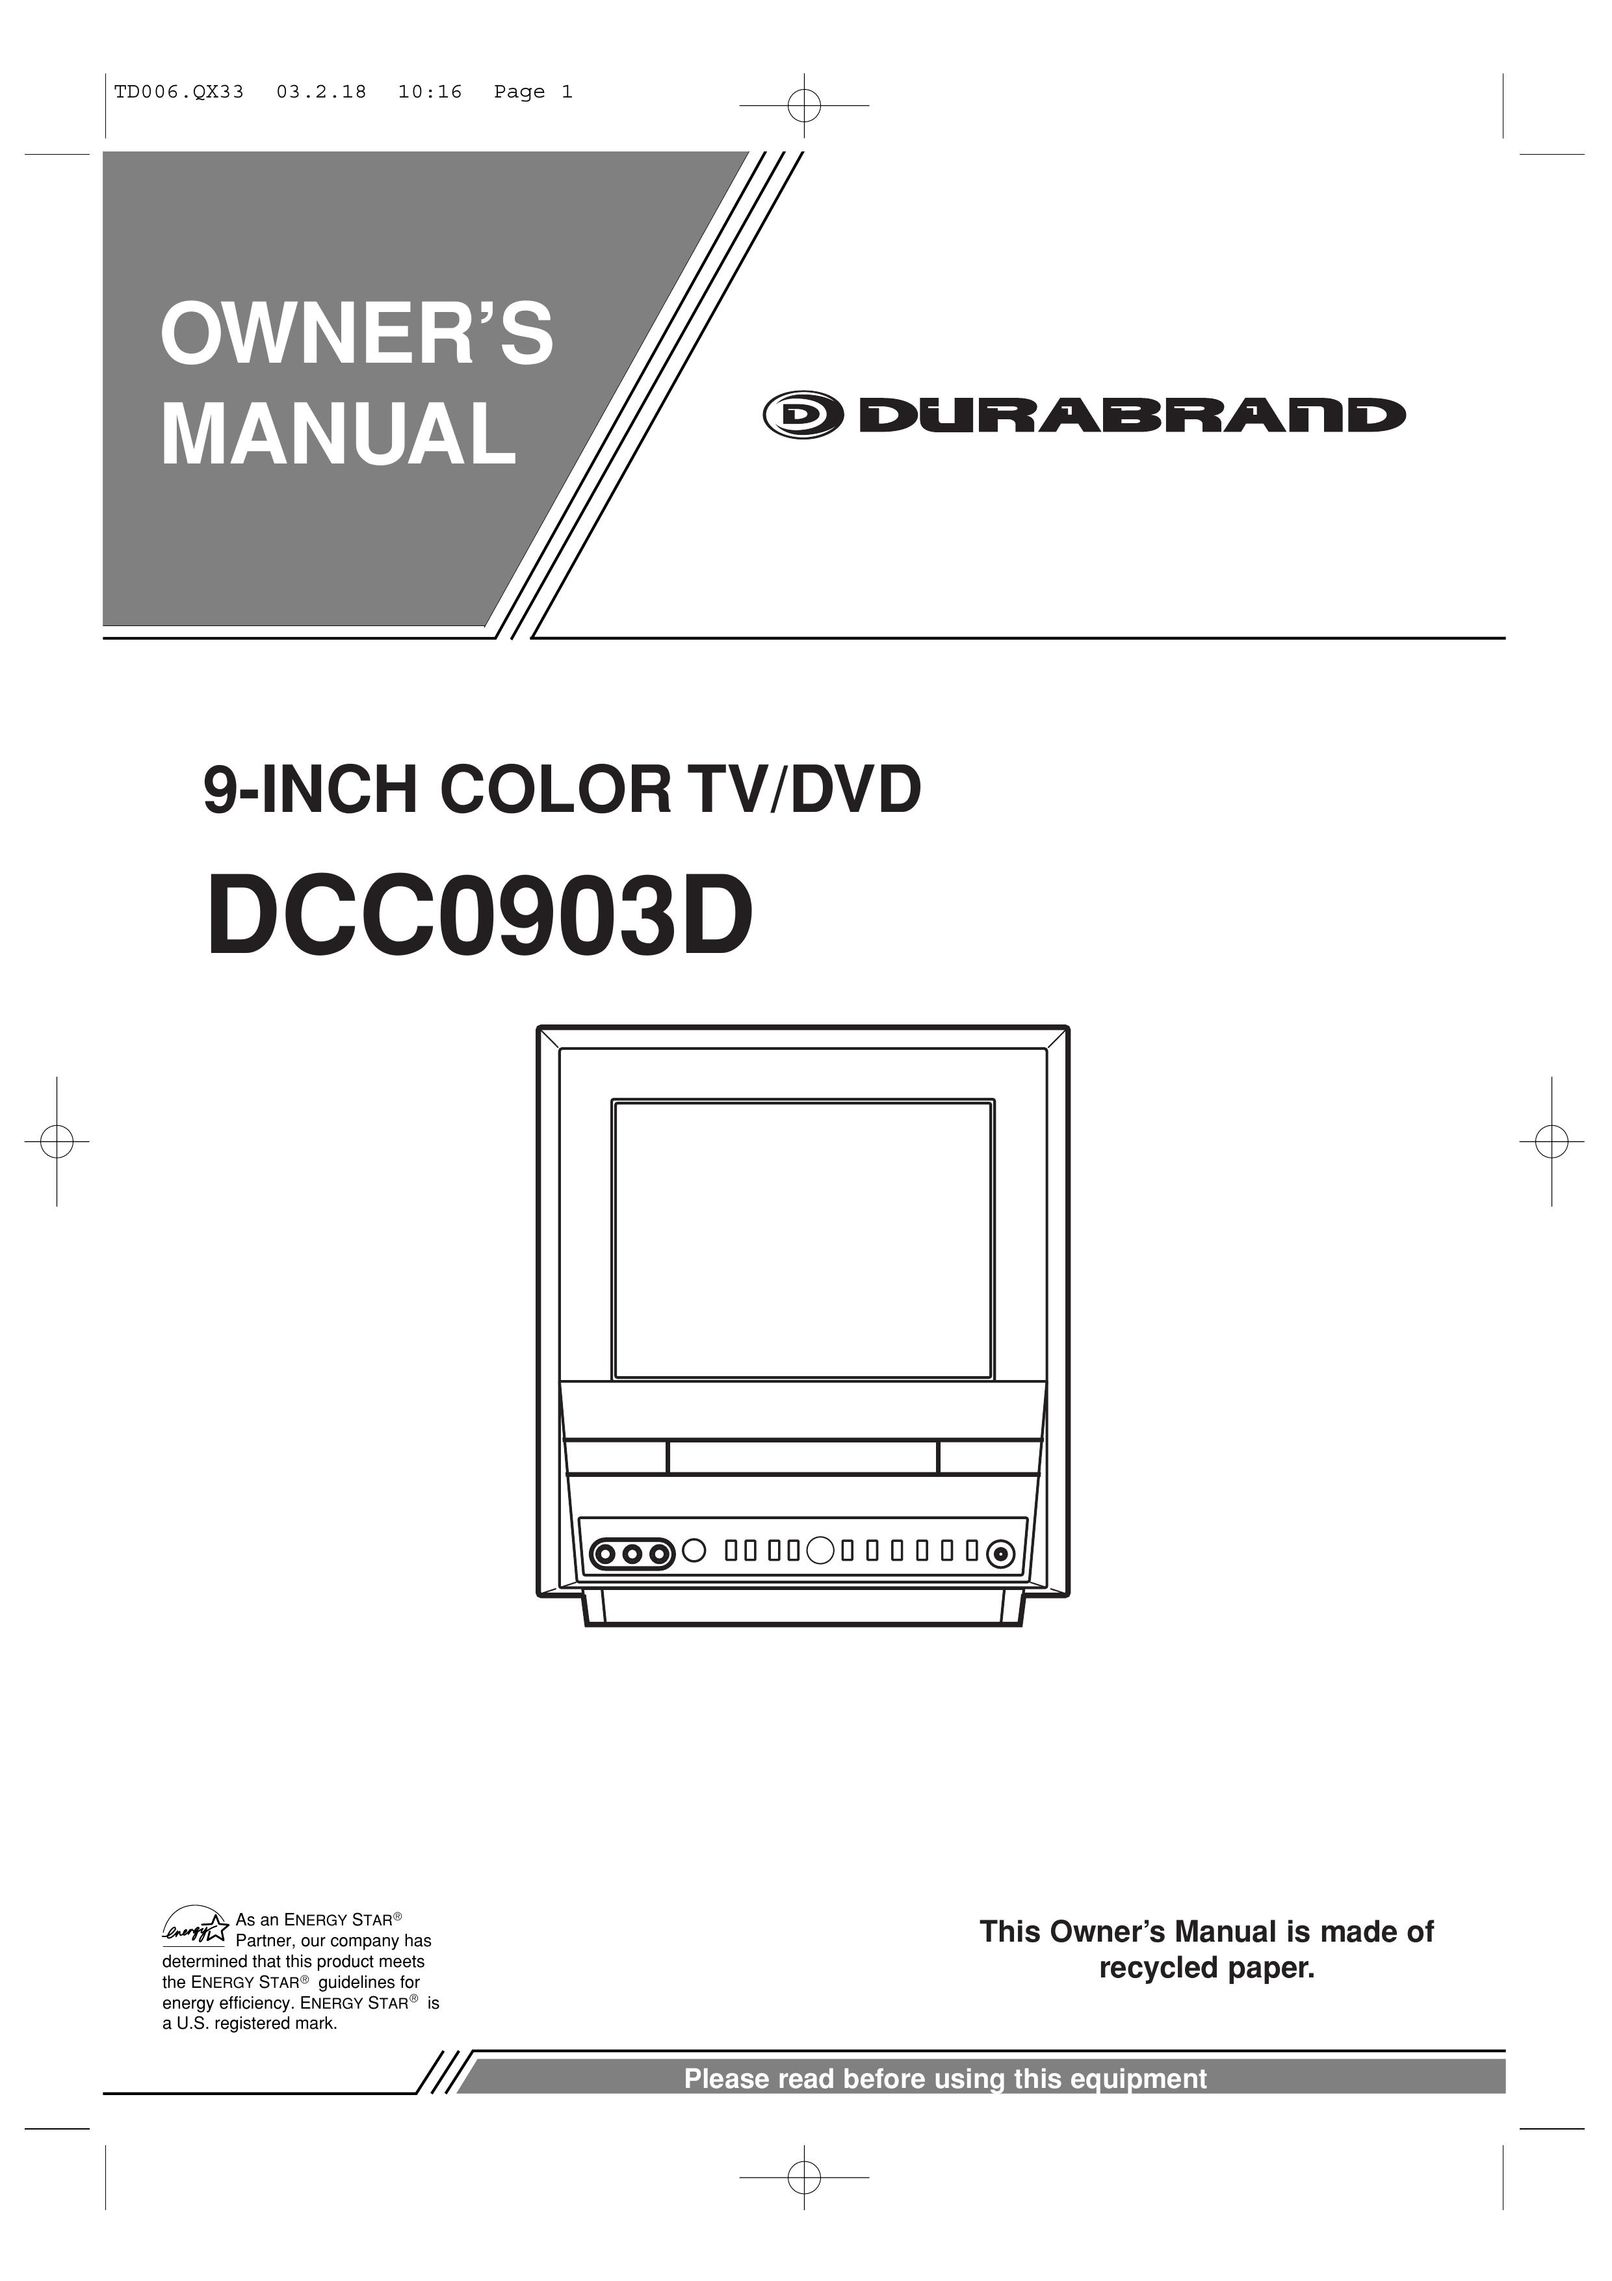 Durabrand DCC0903D CRT Television User Manual